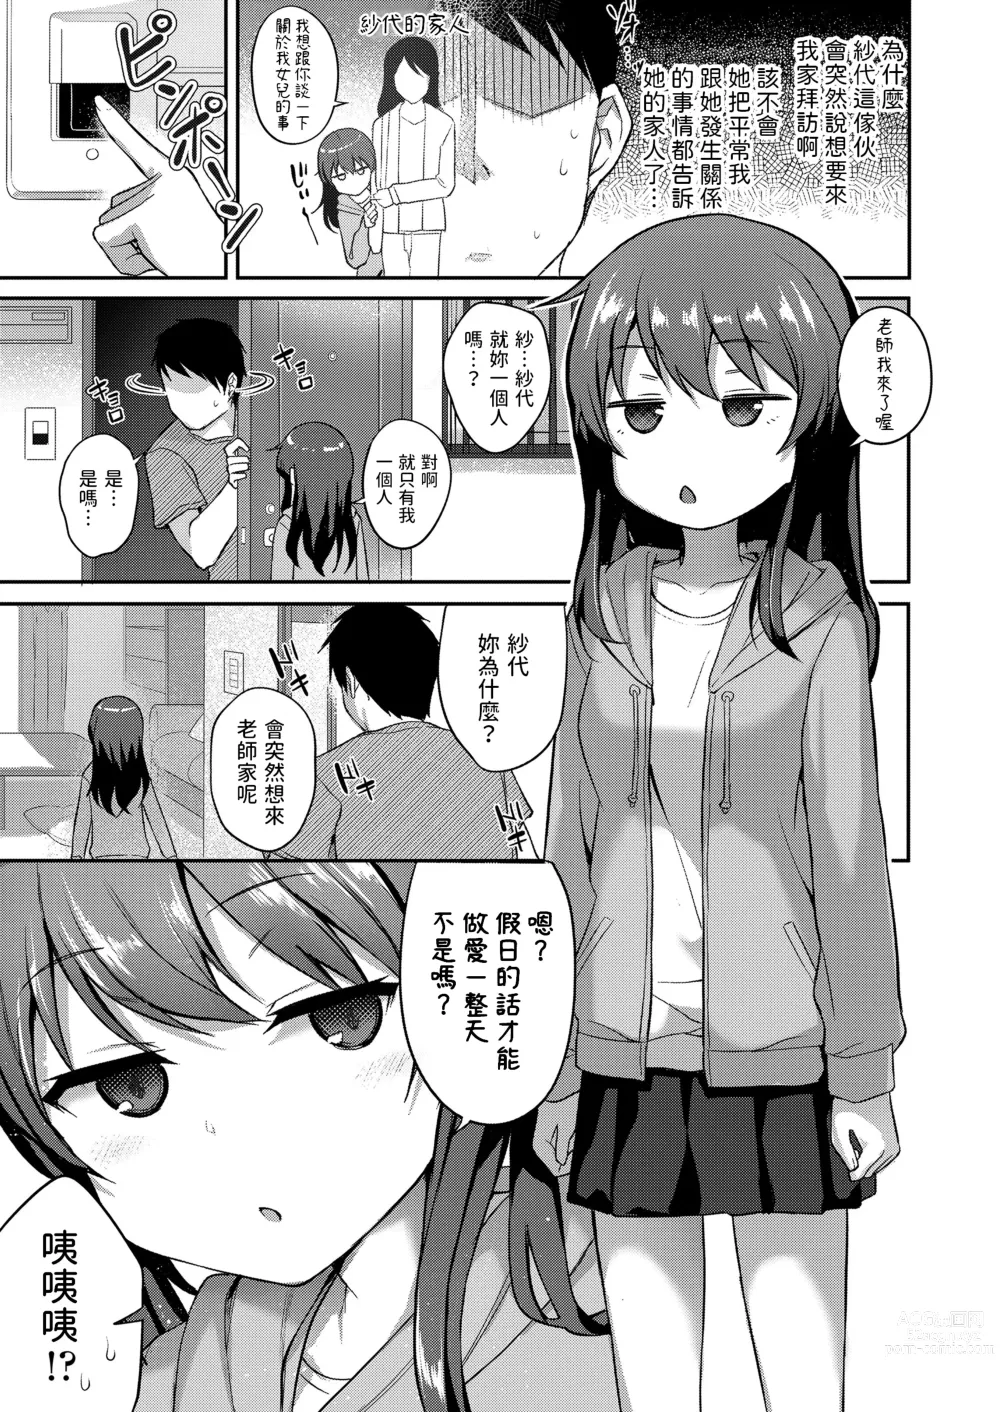 Page 9 of manga Cool na Anoko no Kokoro Moyou